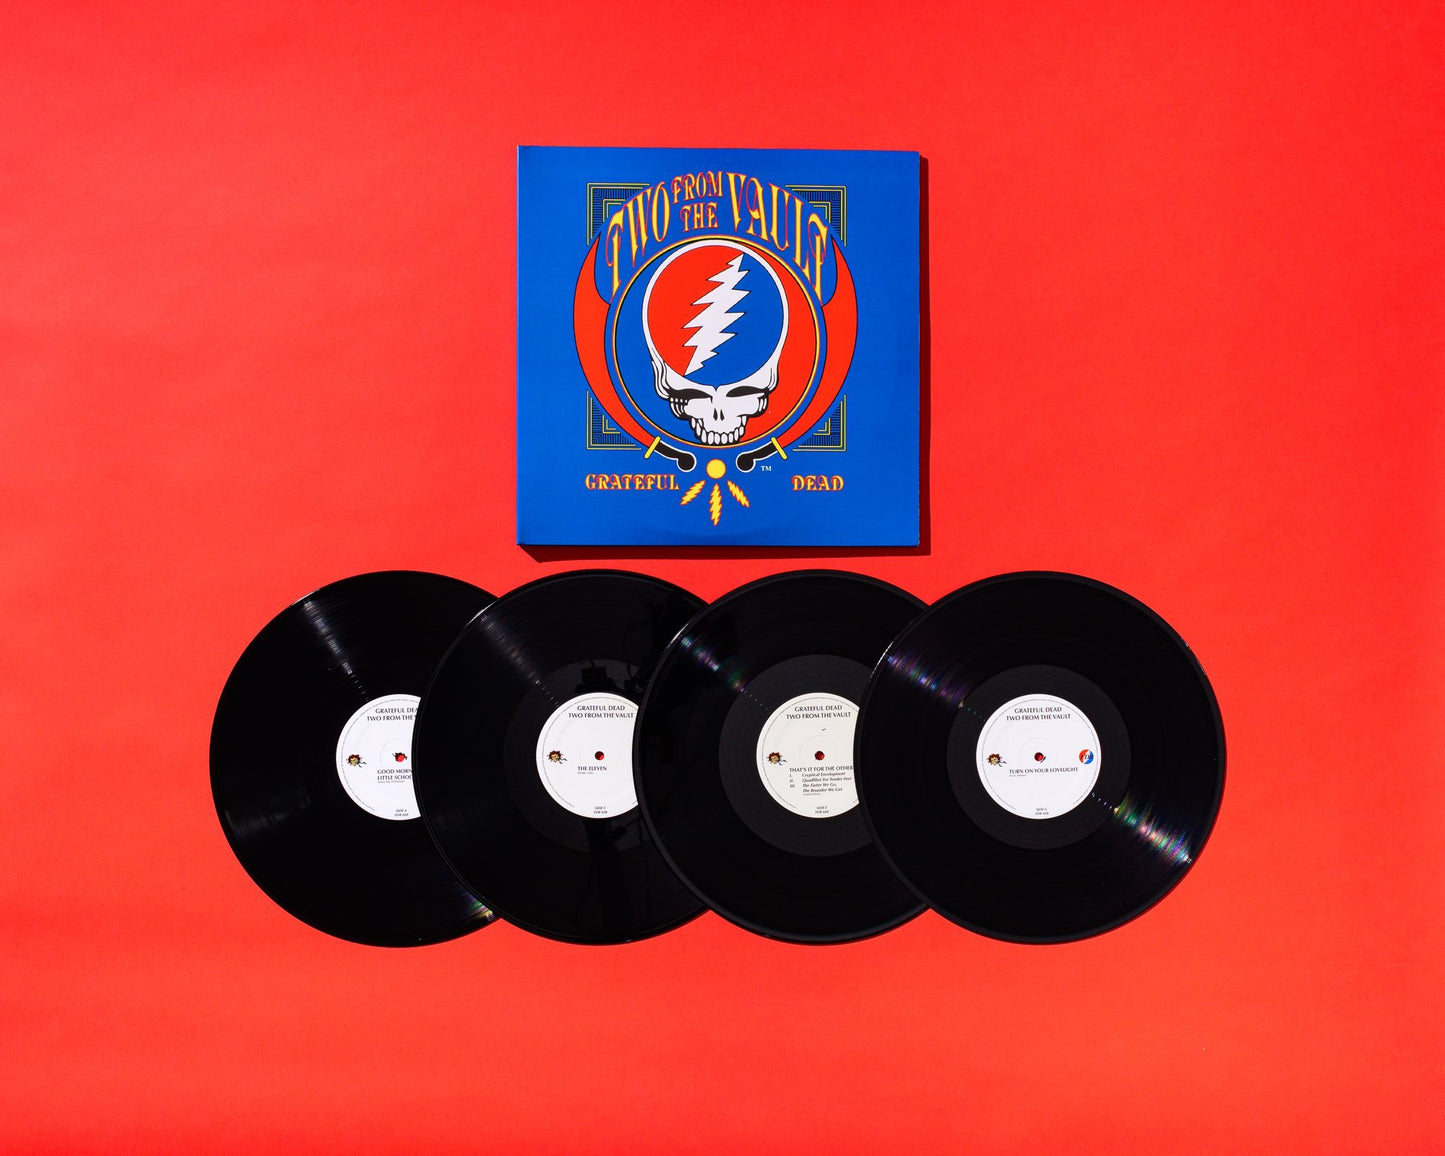 Grateful Dead - Two From The Vault 4 Vinyl LPs